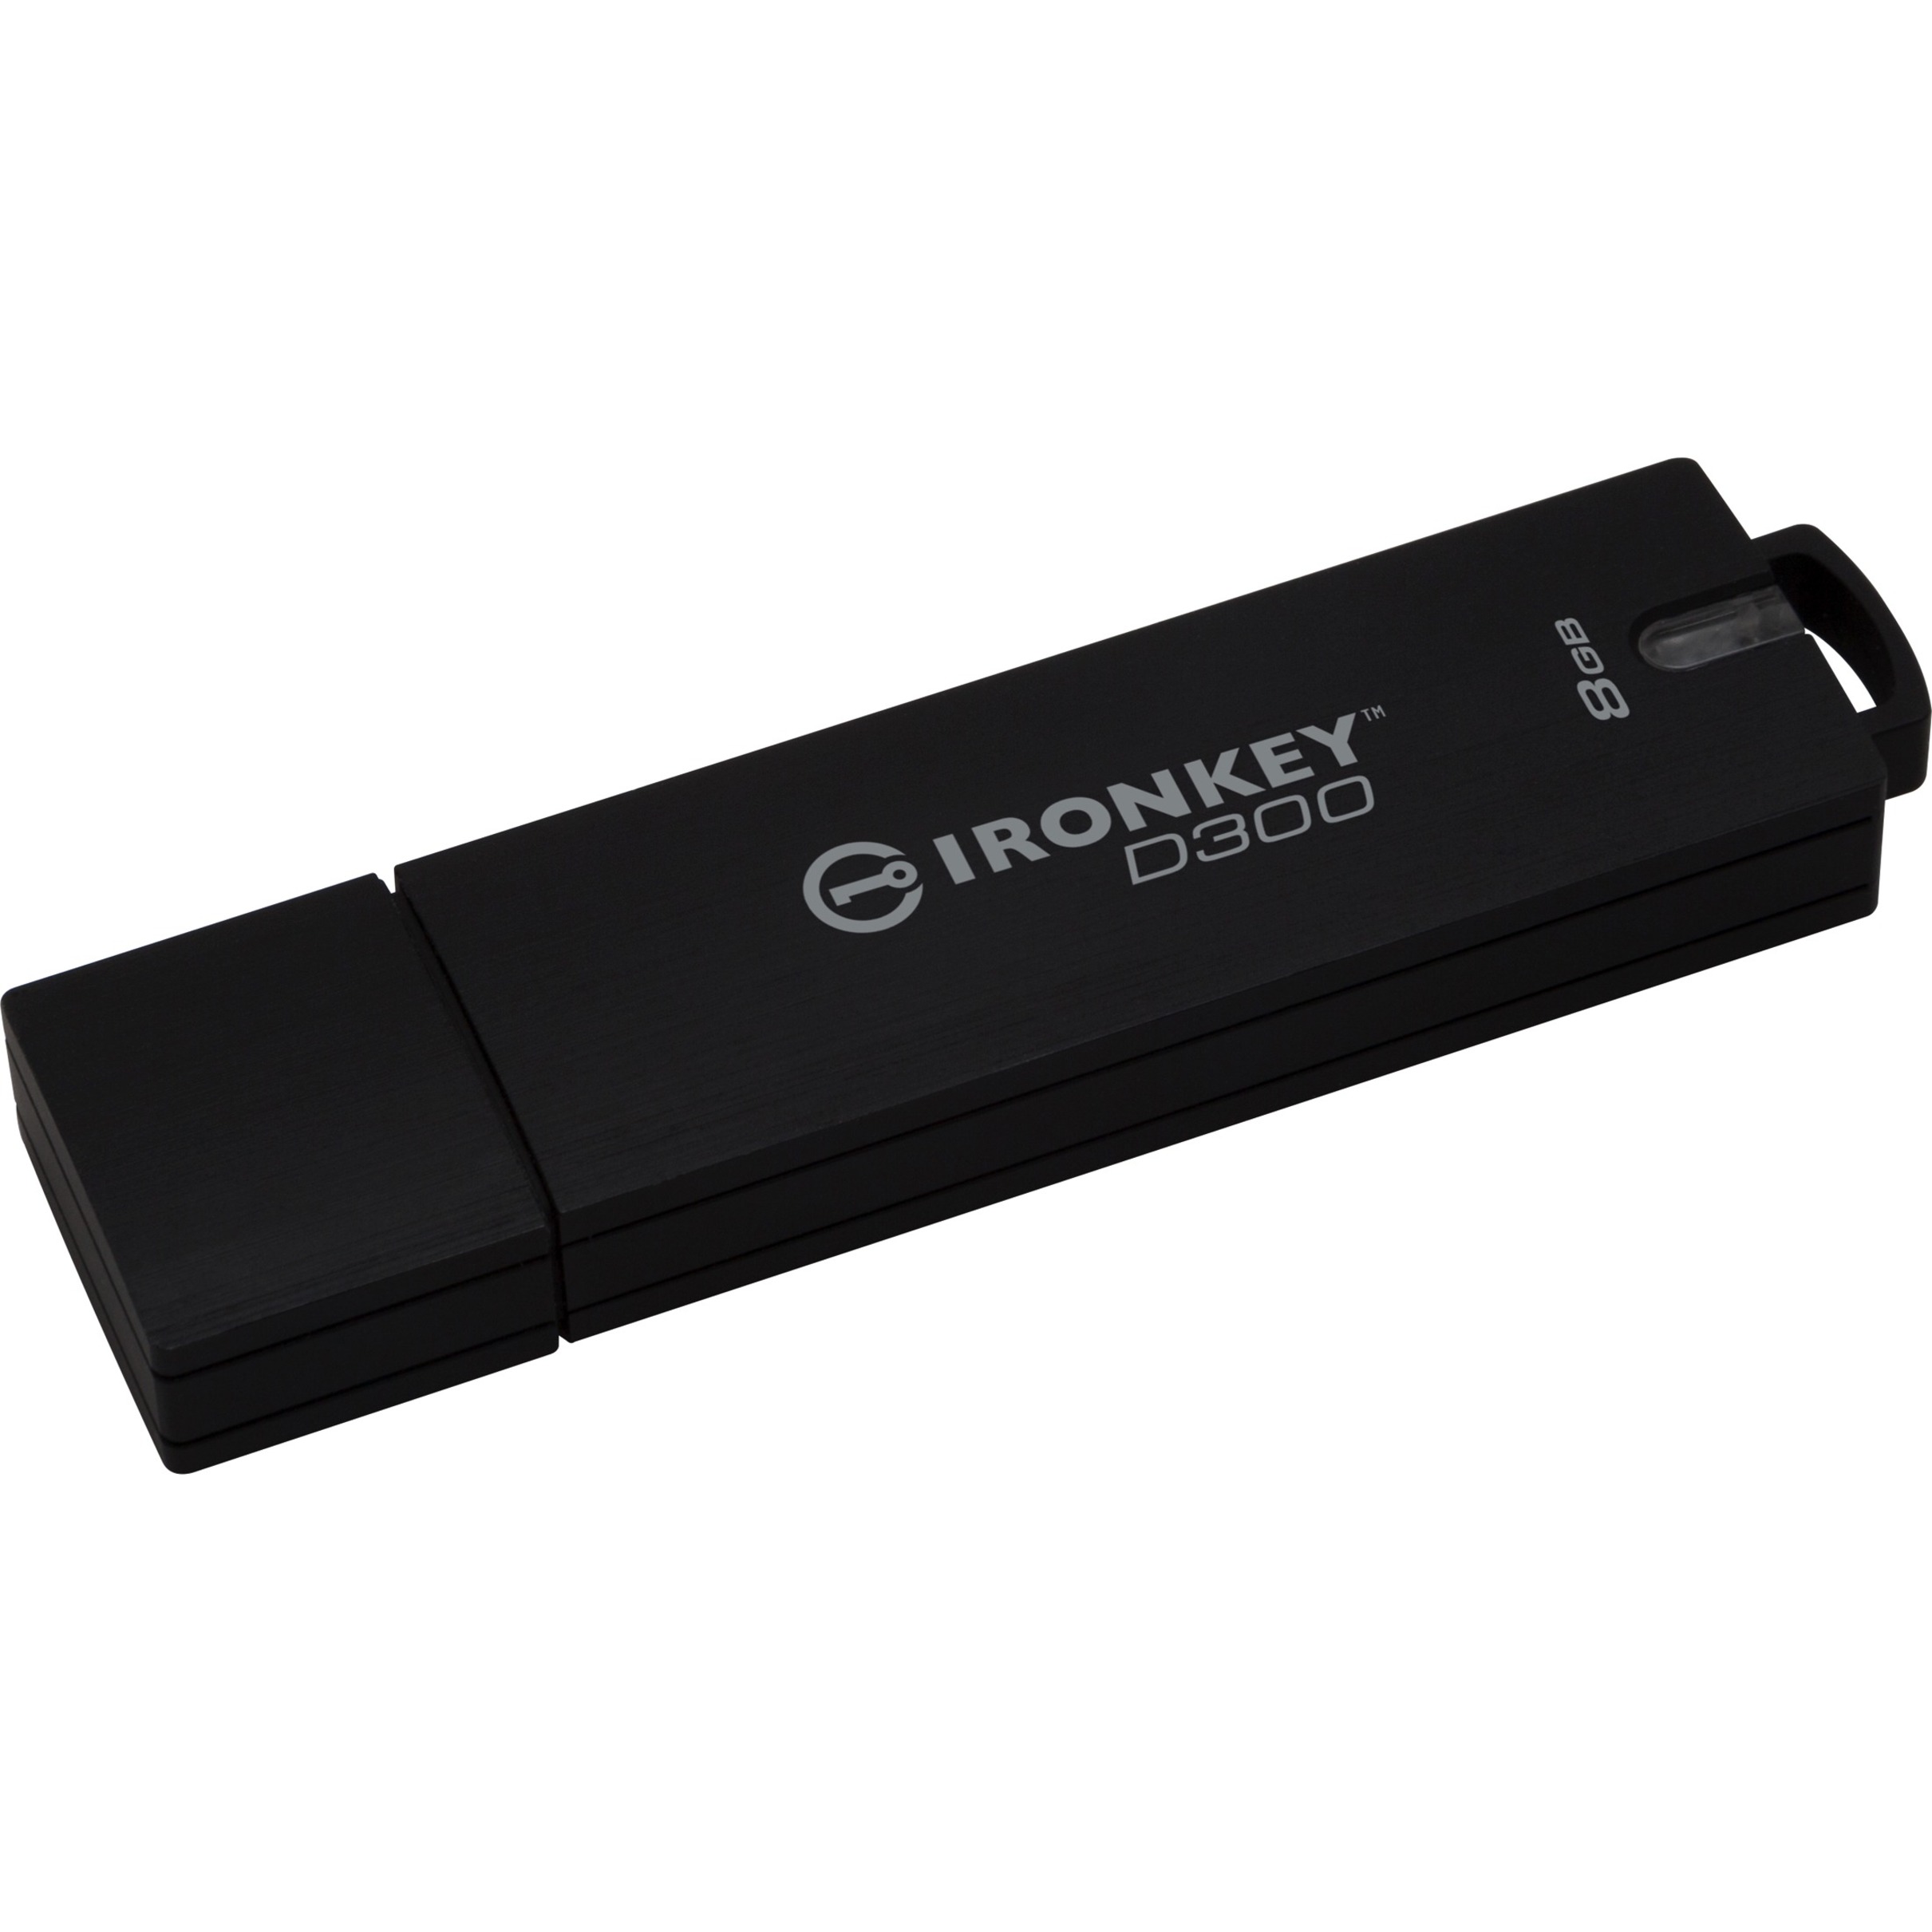 Kingston IronKeyTM D300 8GB USB Flash drive - image 2 of 3